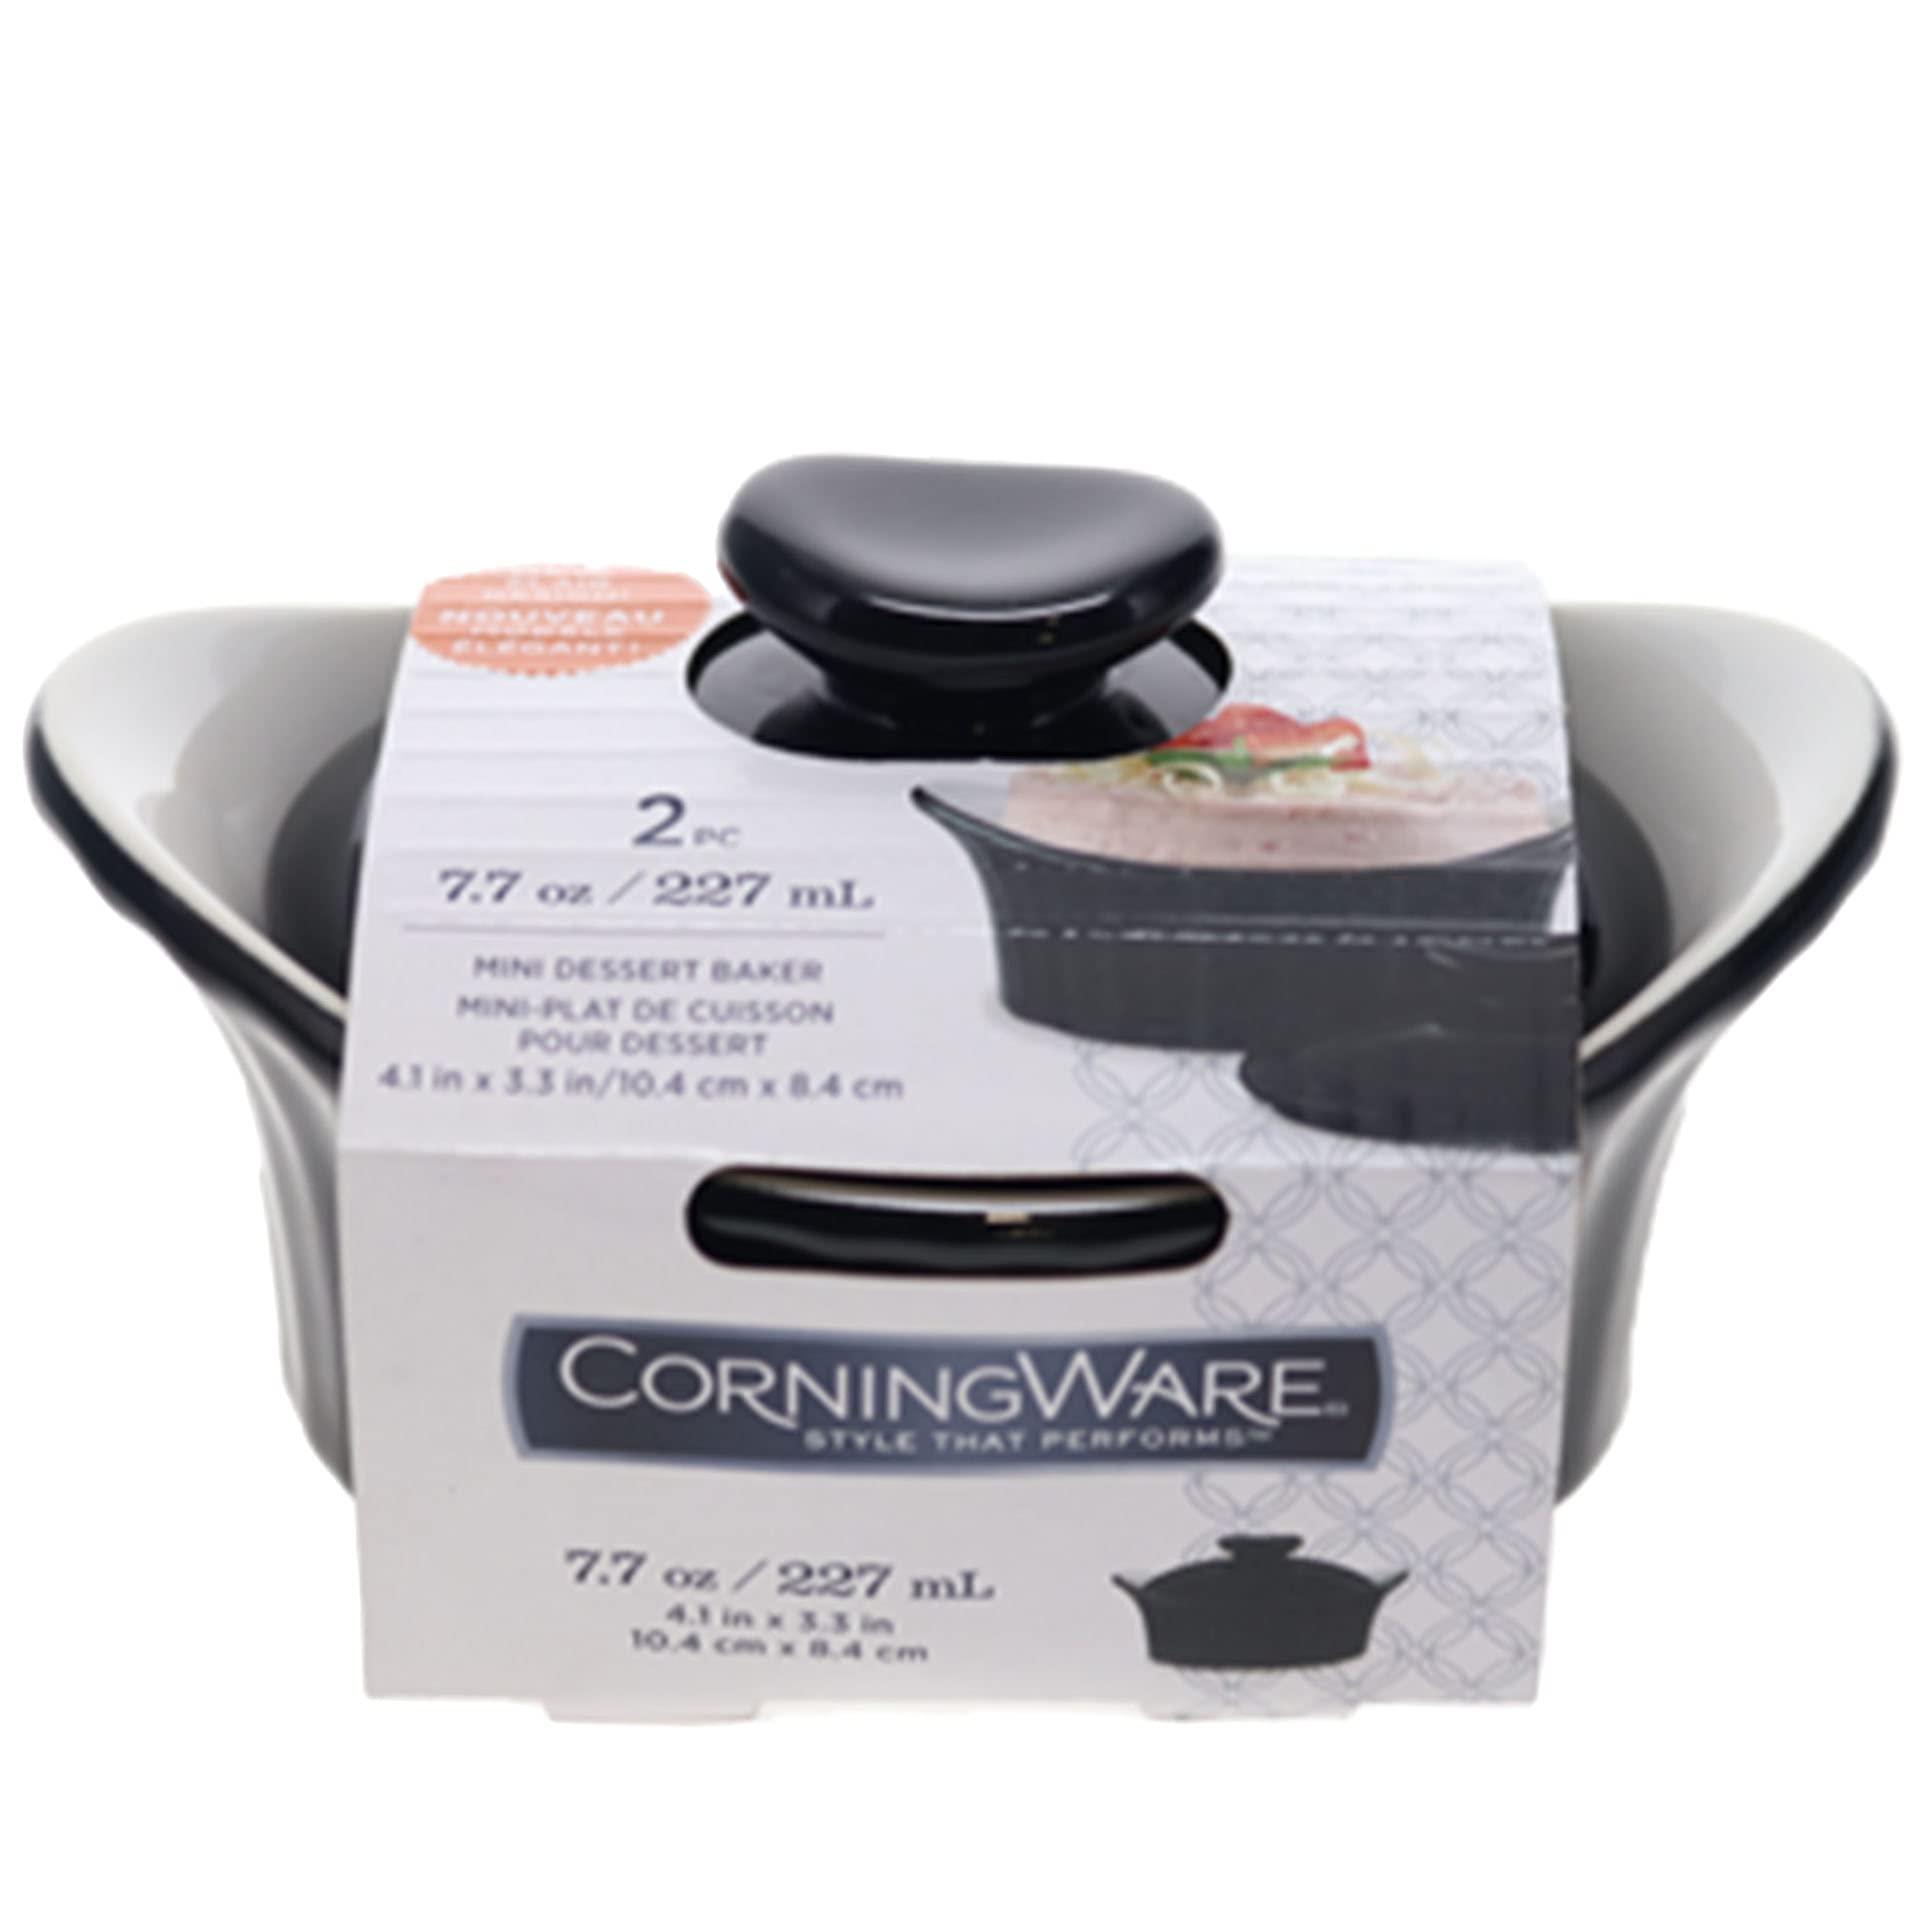 Corningware Stoneware 7.7oz/ 227ml Mini Dessert Baker with Black Lid